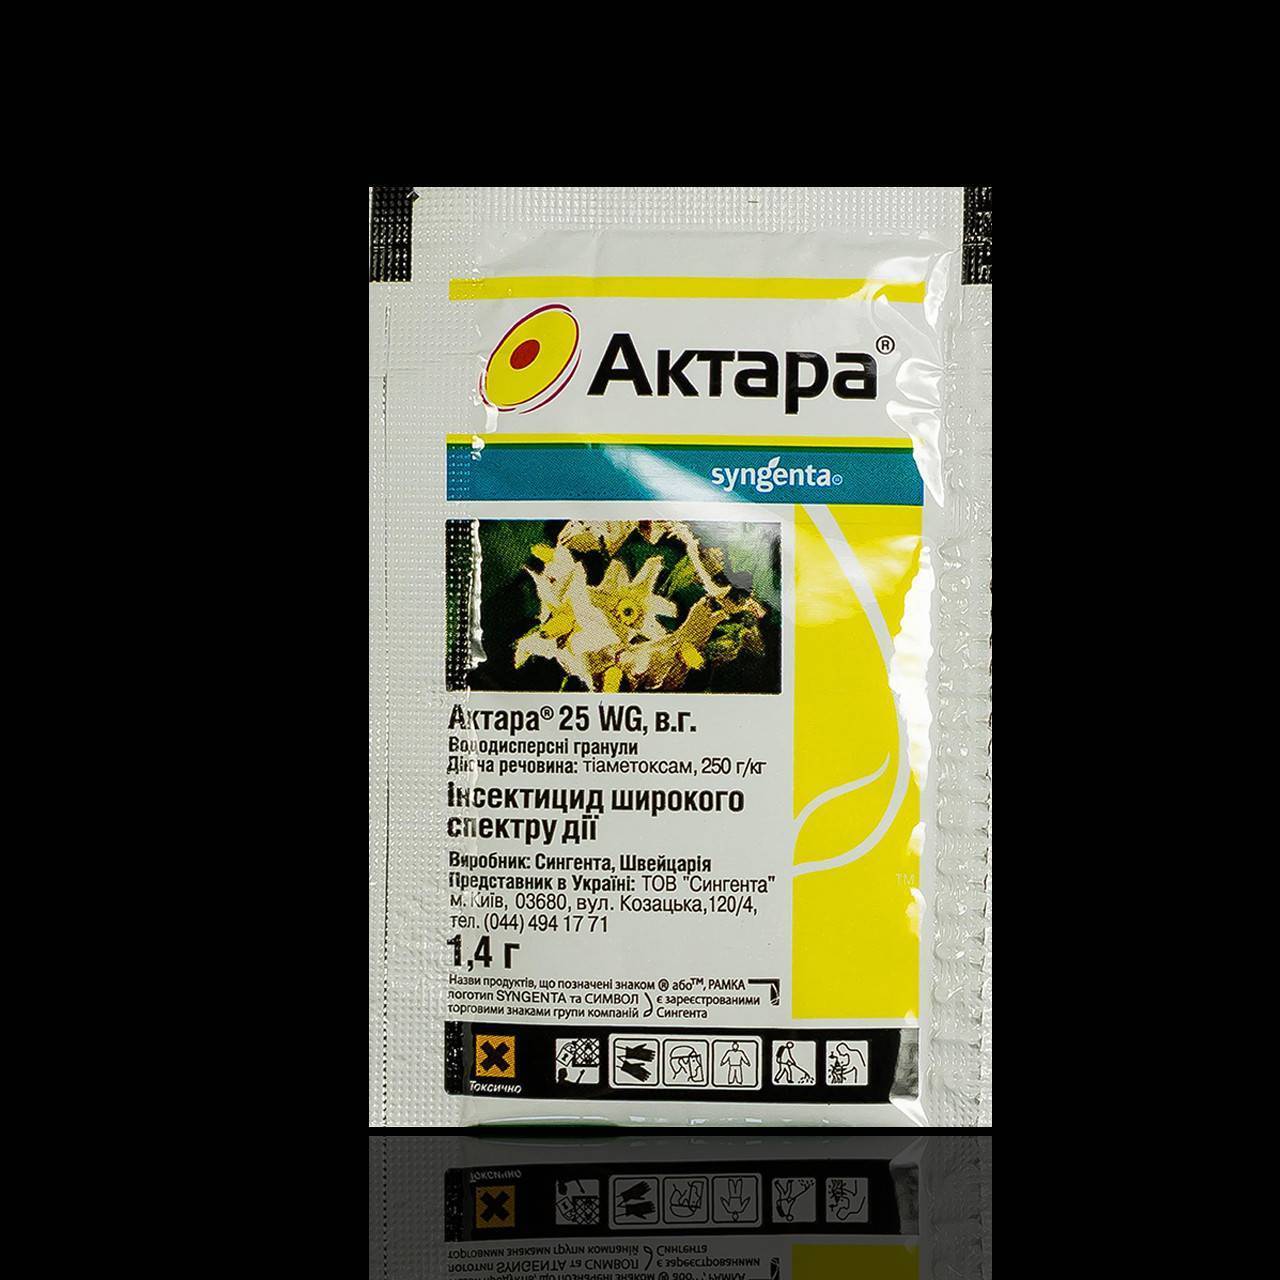 Актара - инструкция по применению, отзывы, цена на препарат и хранение